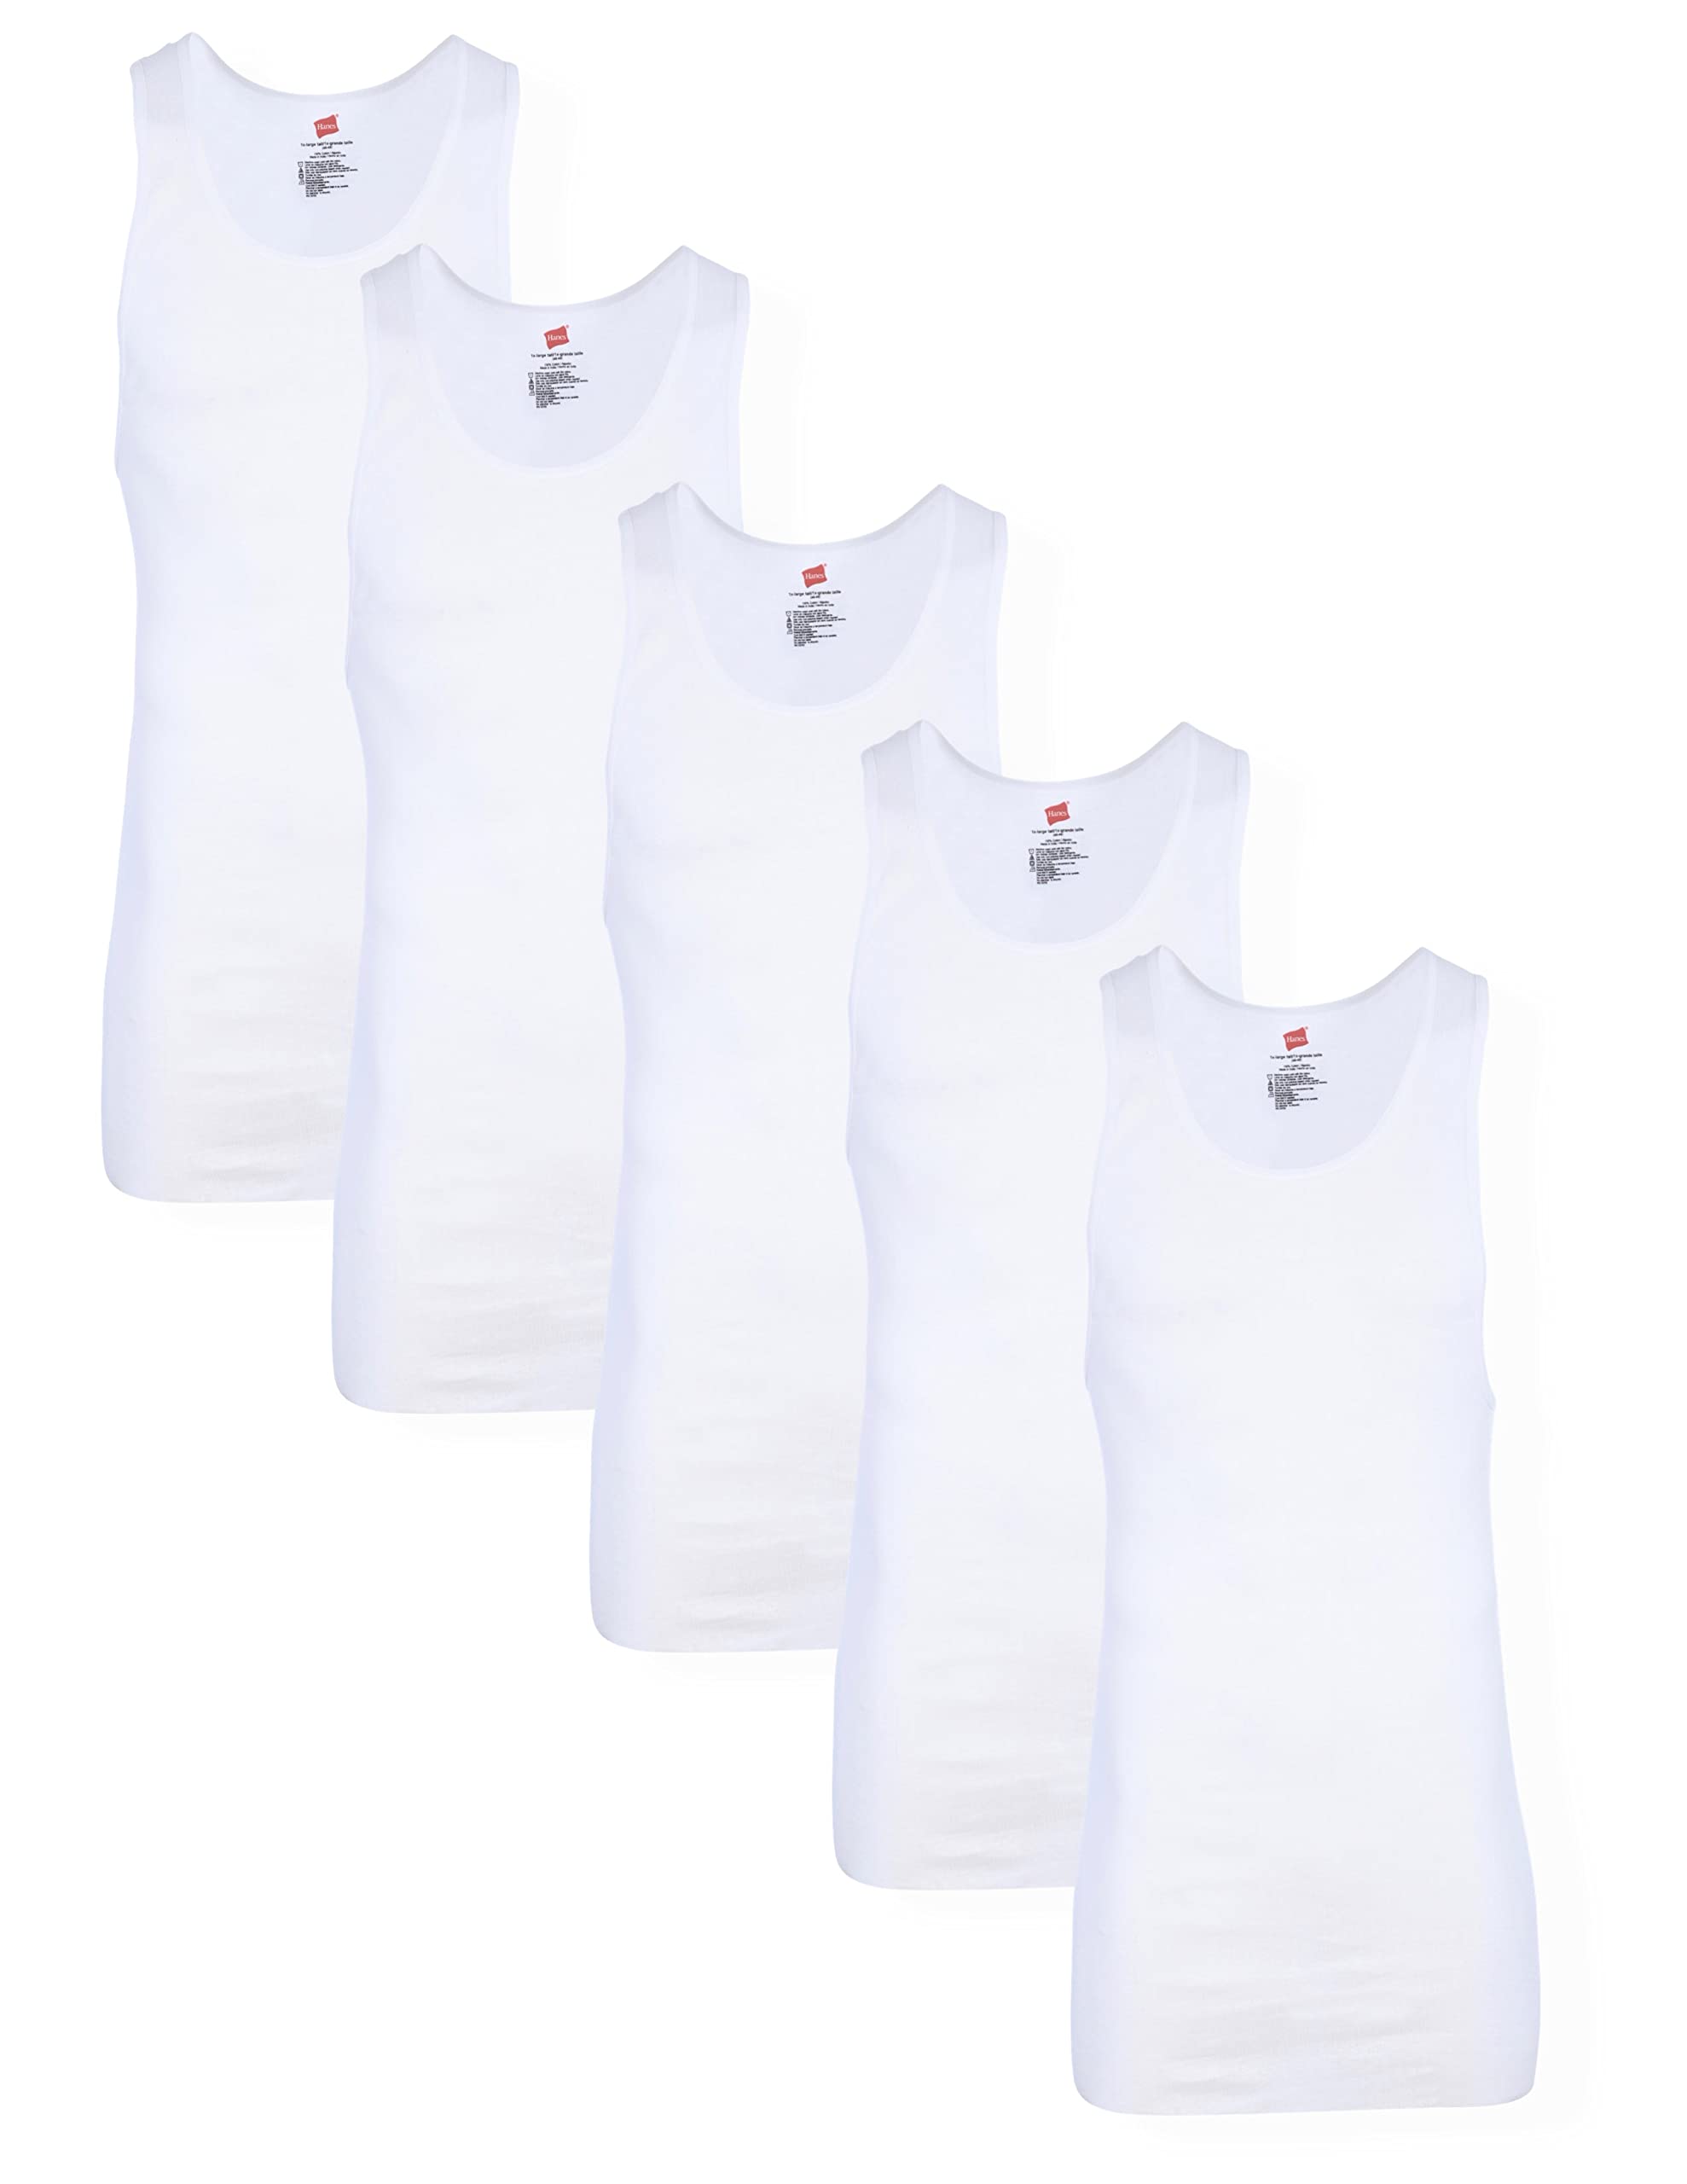 Hanes Men’s Tagless Ribbed Undershirt Tall, Various Pack Size Options